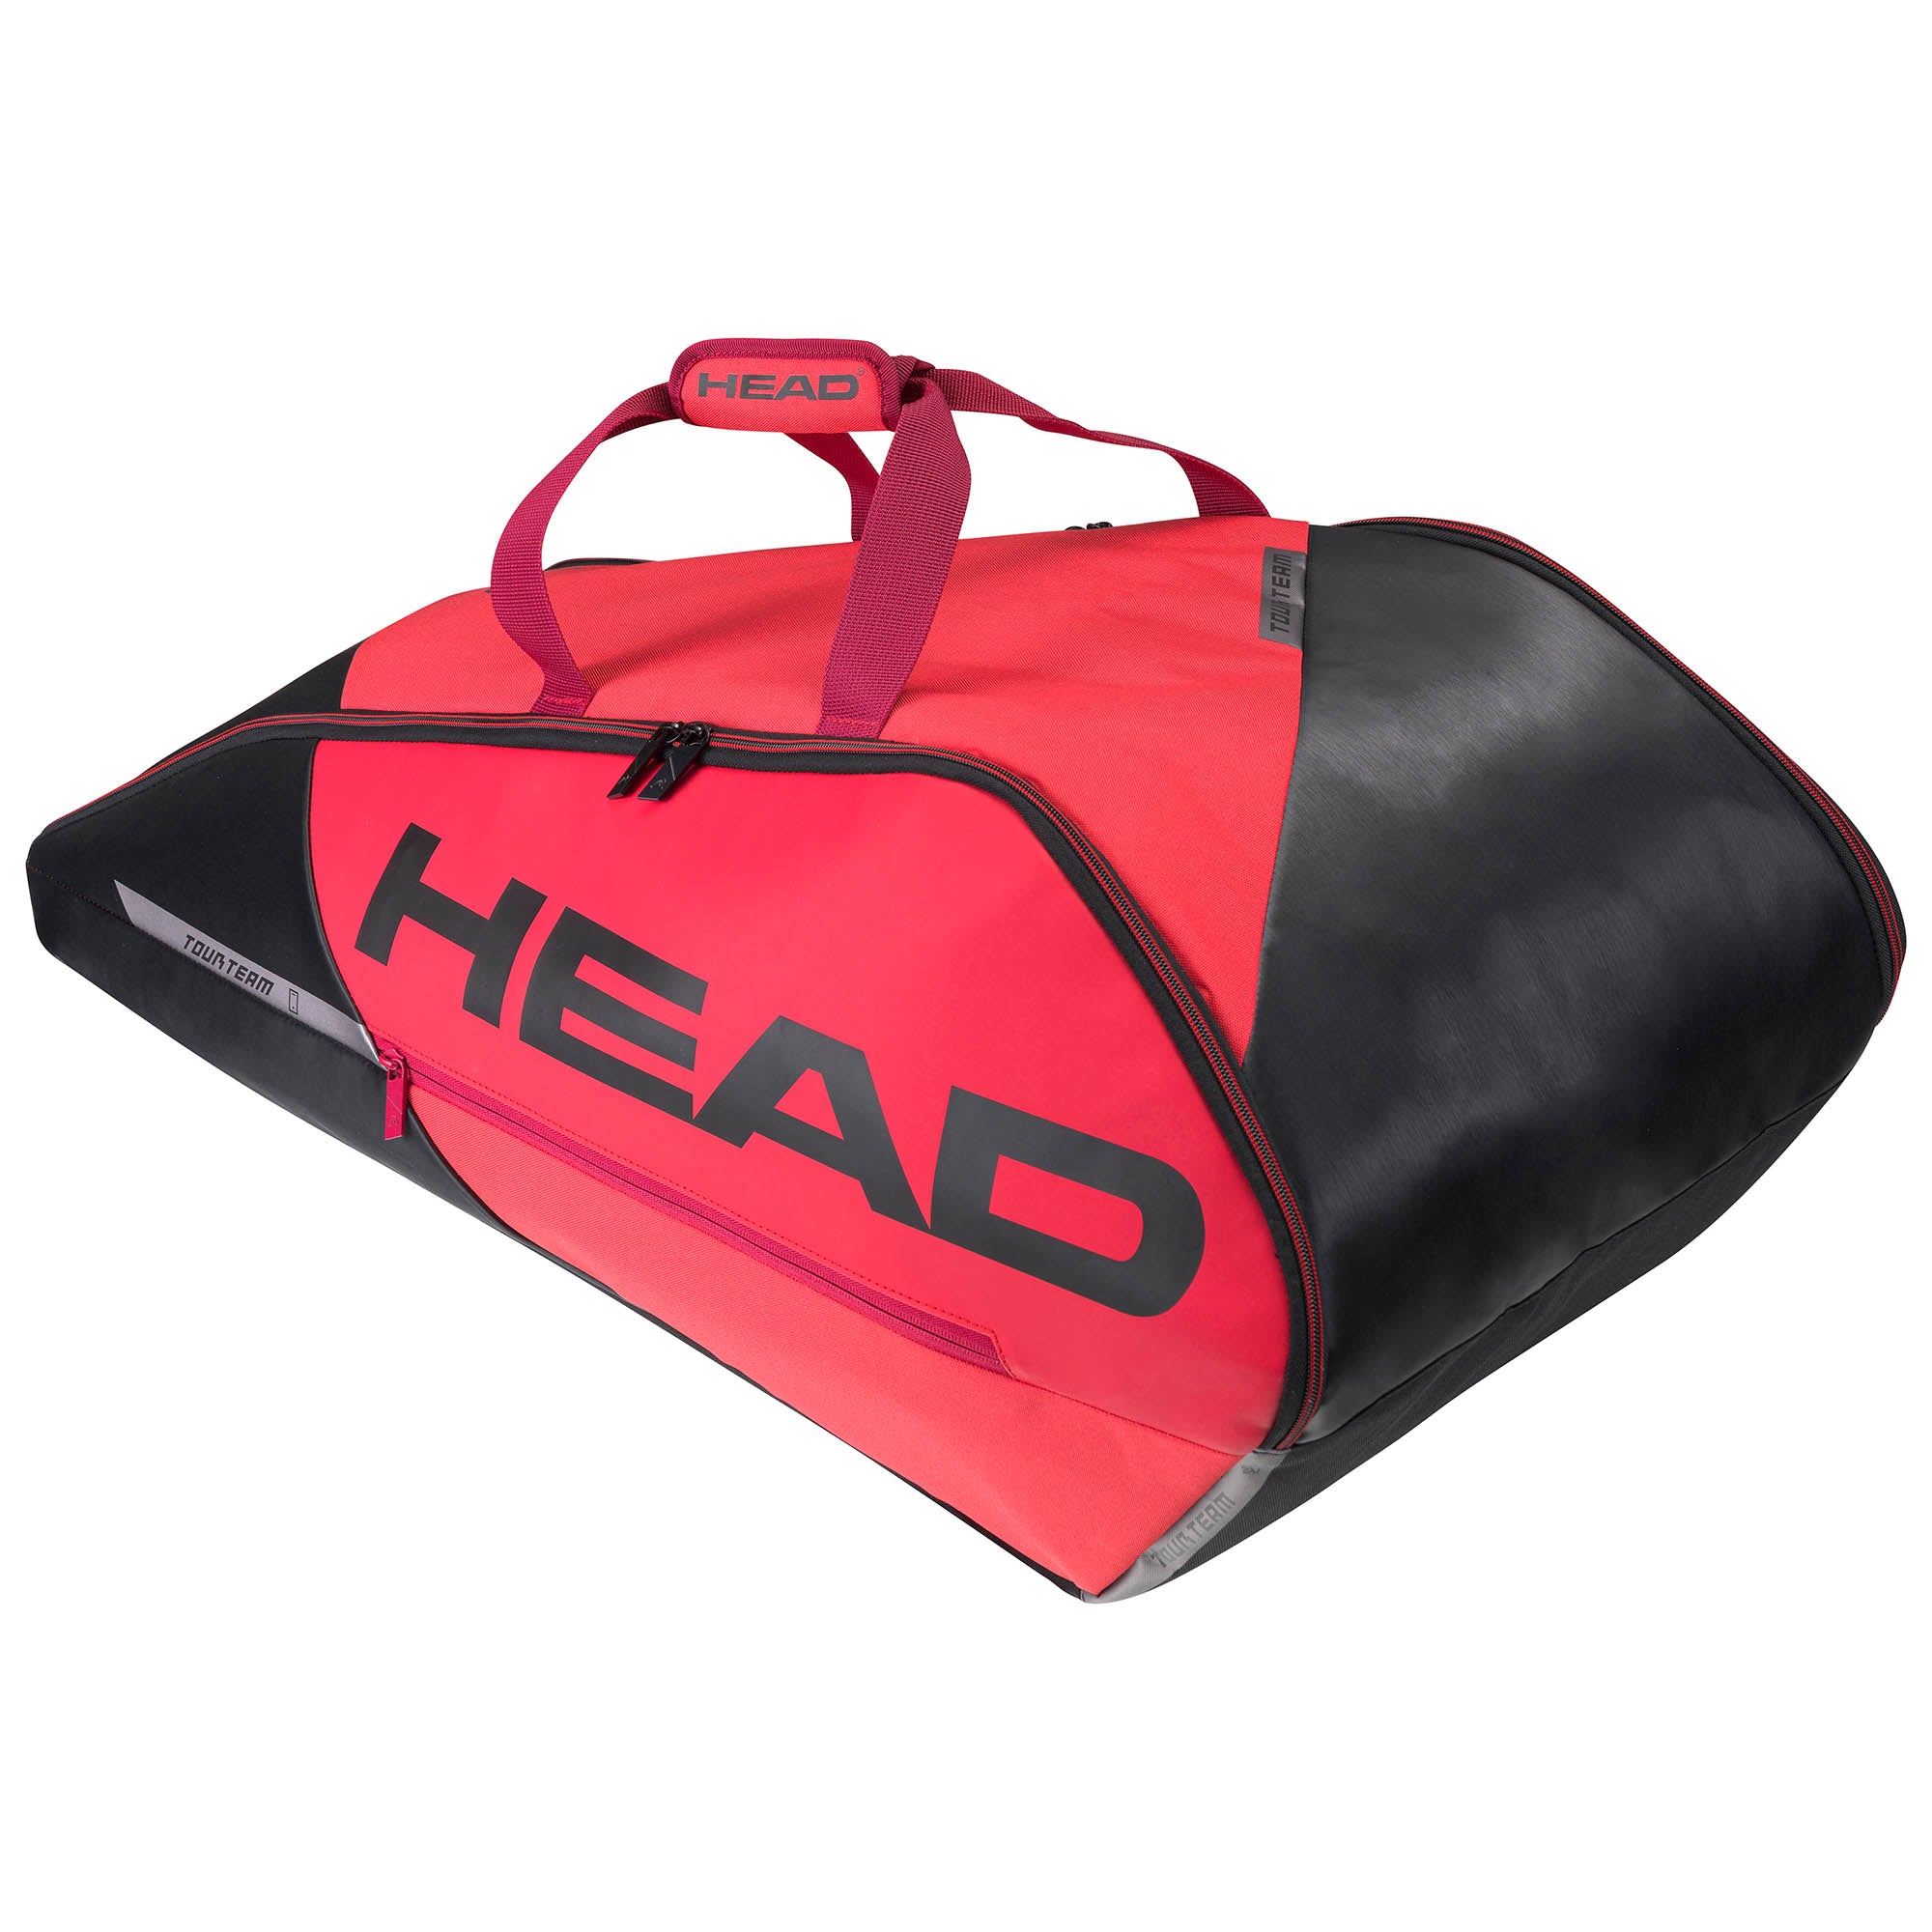 Head Tour Team 9R Supercombi 9 Racket Bag